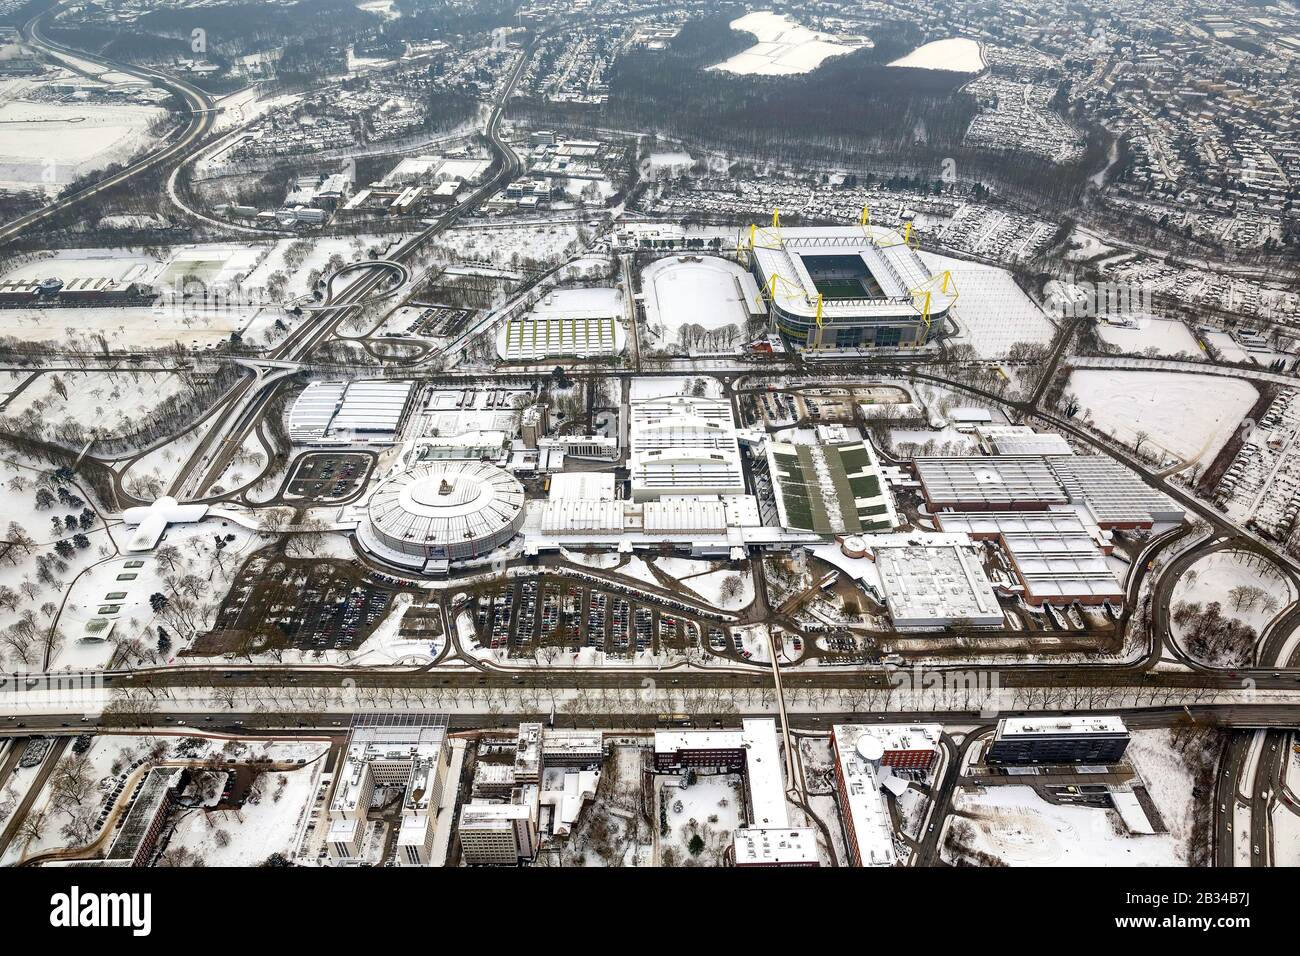 snow-covered terrain of Borusseum, the Signal Iduna Park and soccer stadium Westfalenstadion of Dortmund BVB, 19.01.2013, aerial view, Germany, North Rhine-Westphalia, Ruhr Area, Dortmund Stock Photo